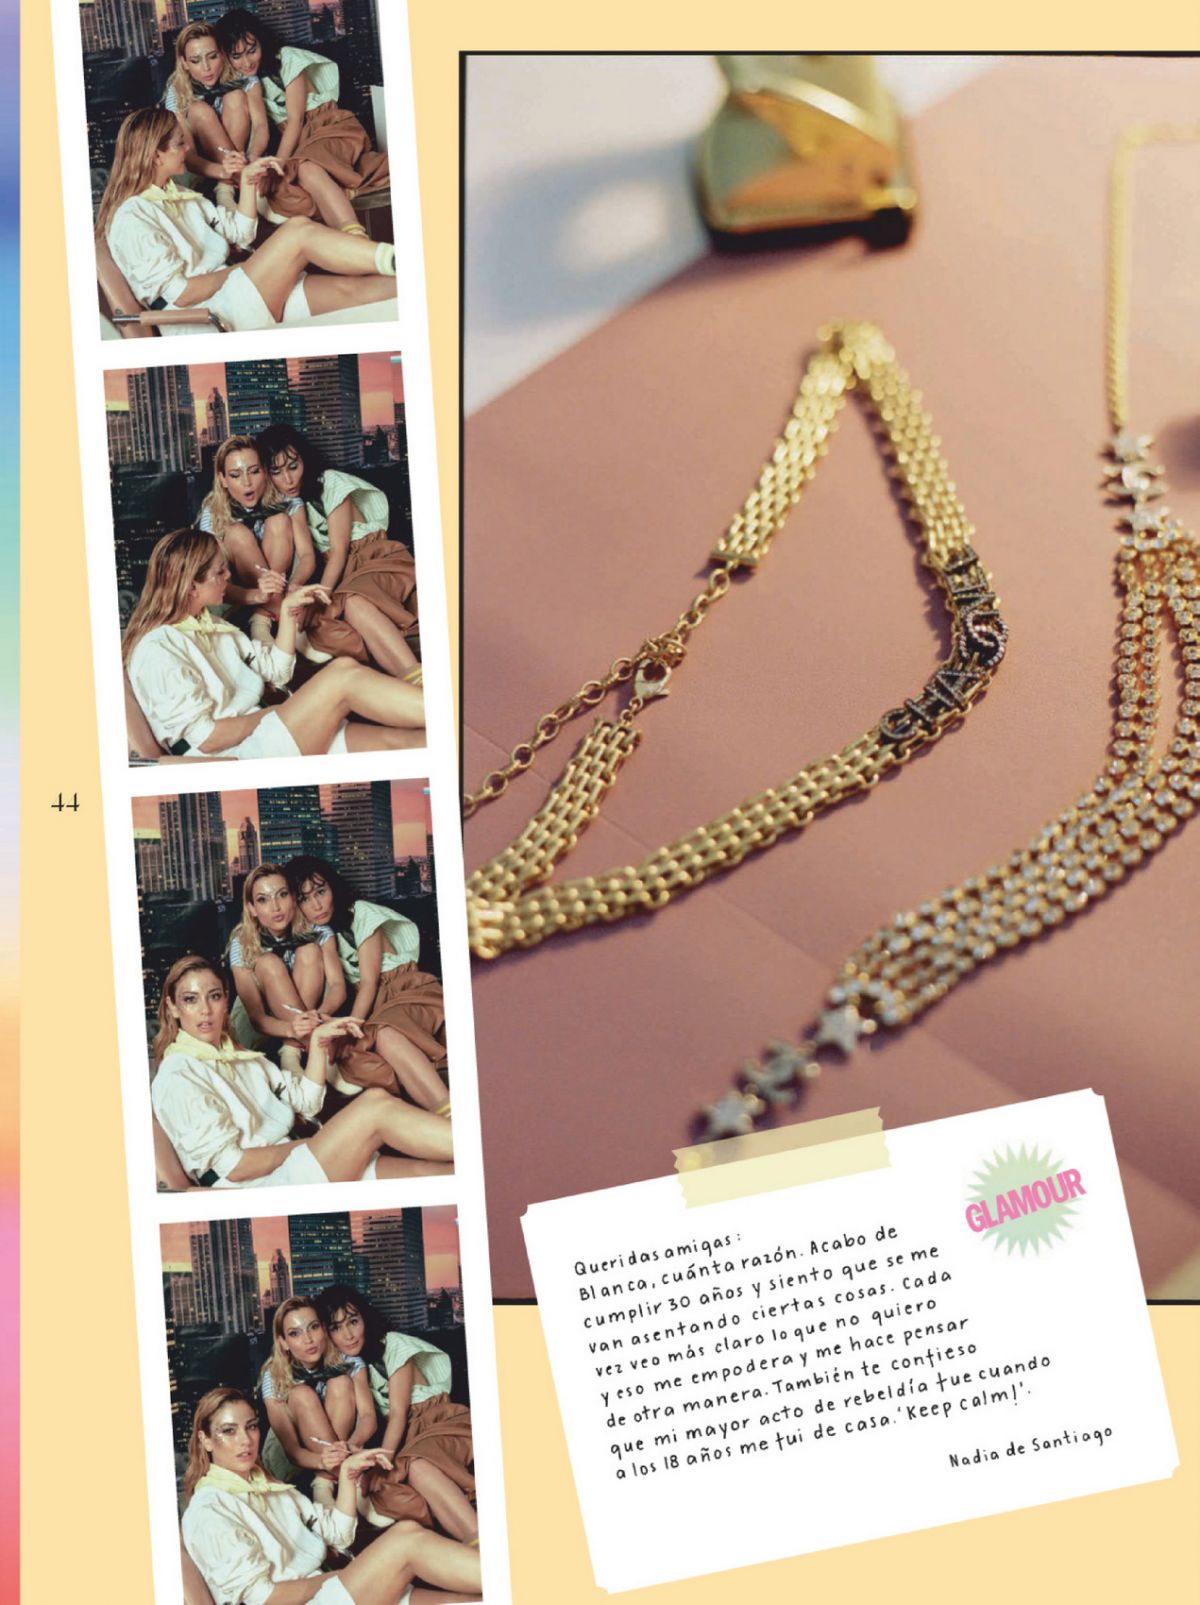 Blanca Suarez, Ana Fernandez Garcia and Nadia de Santiago in Glamour Magazine, Spain July 2020 4